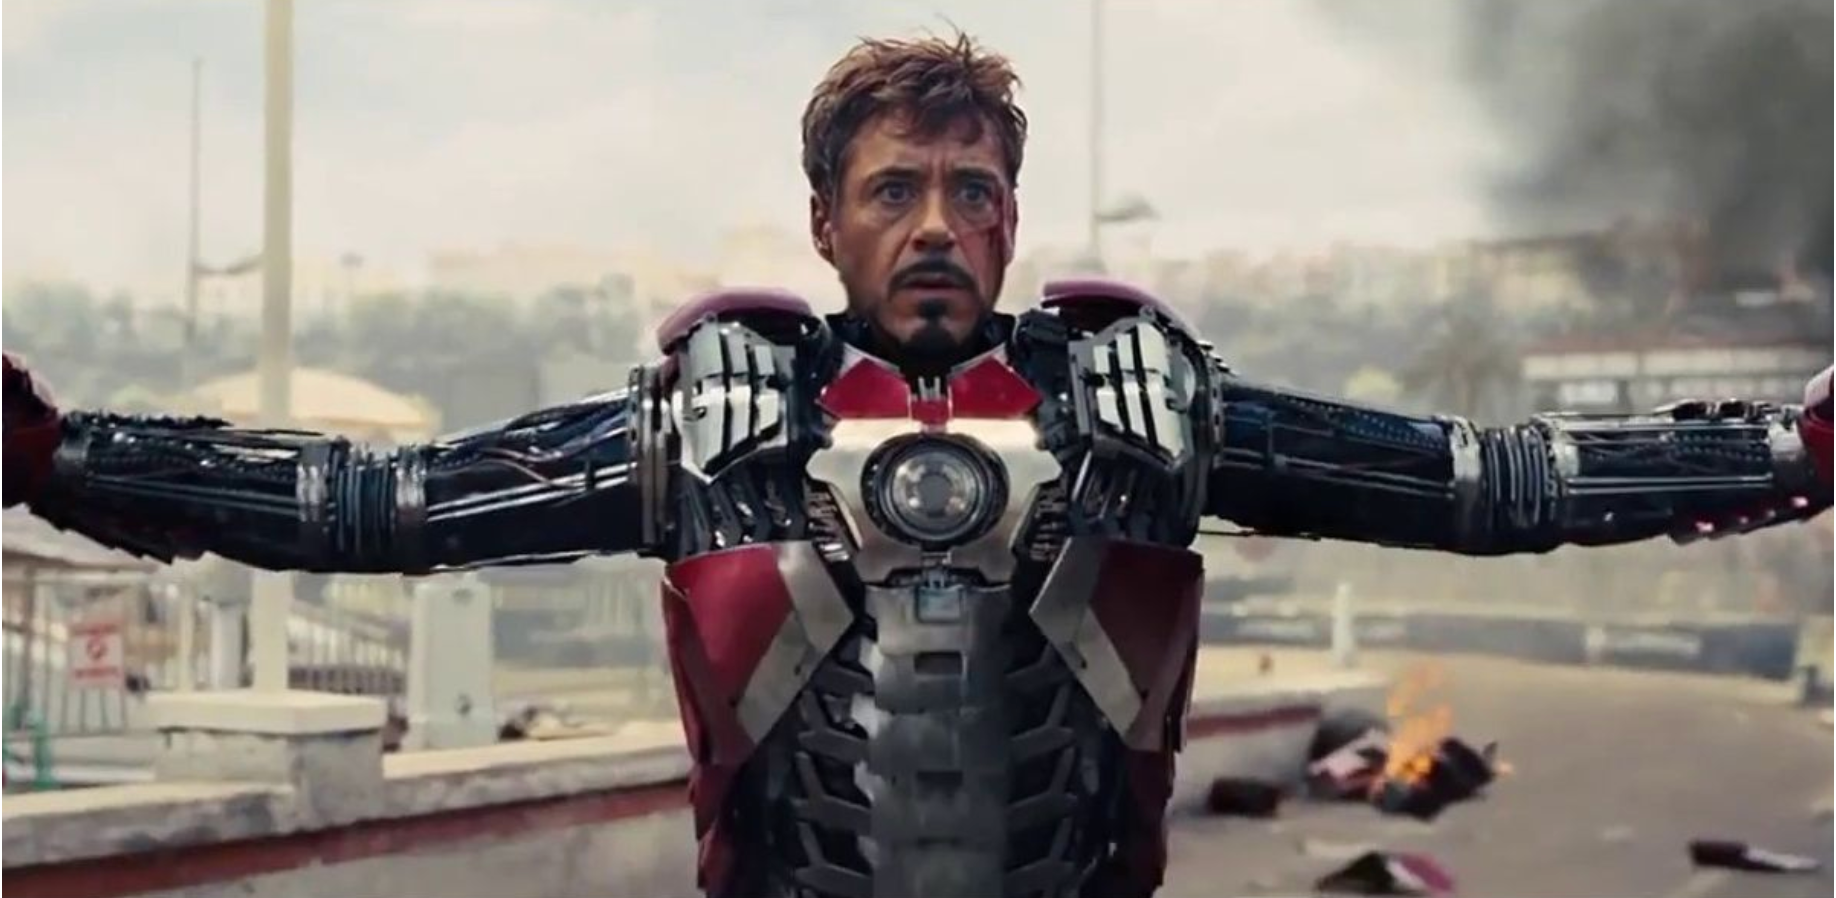 Tony Stark raising his arms